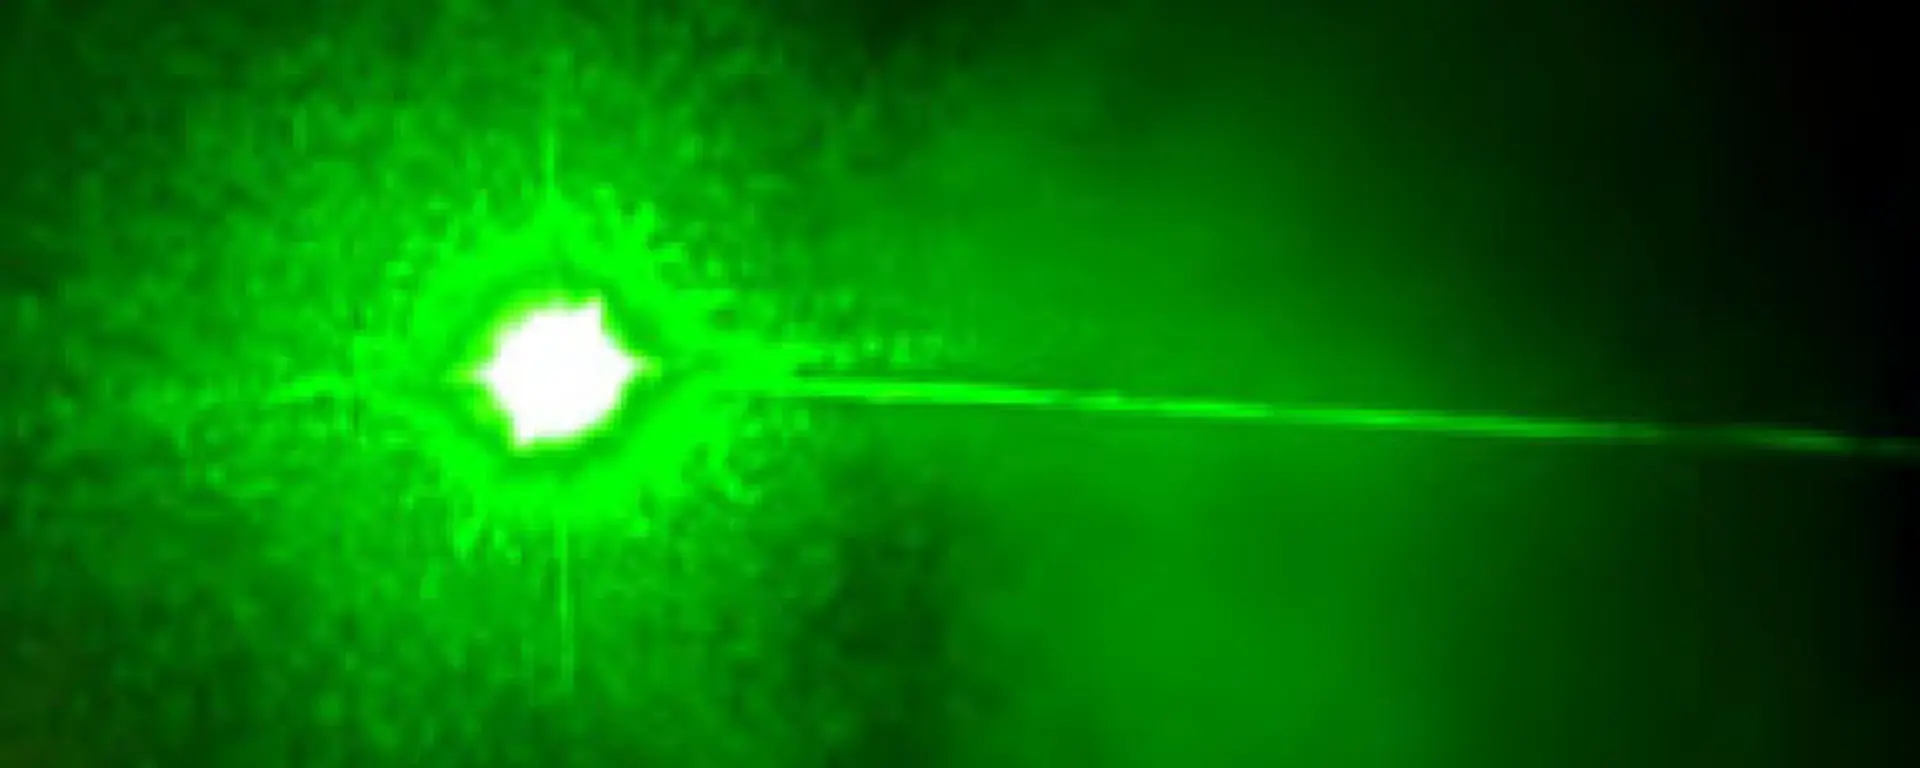 Green laser beam